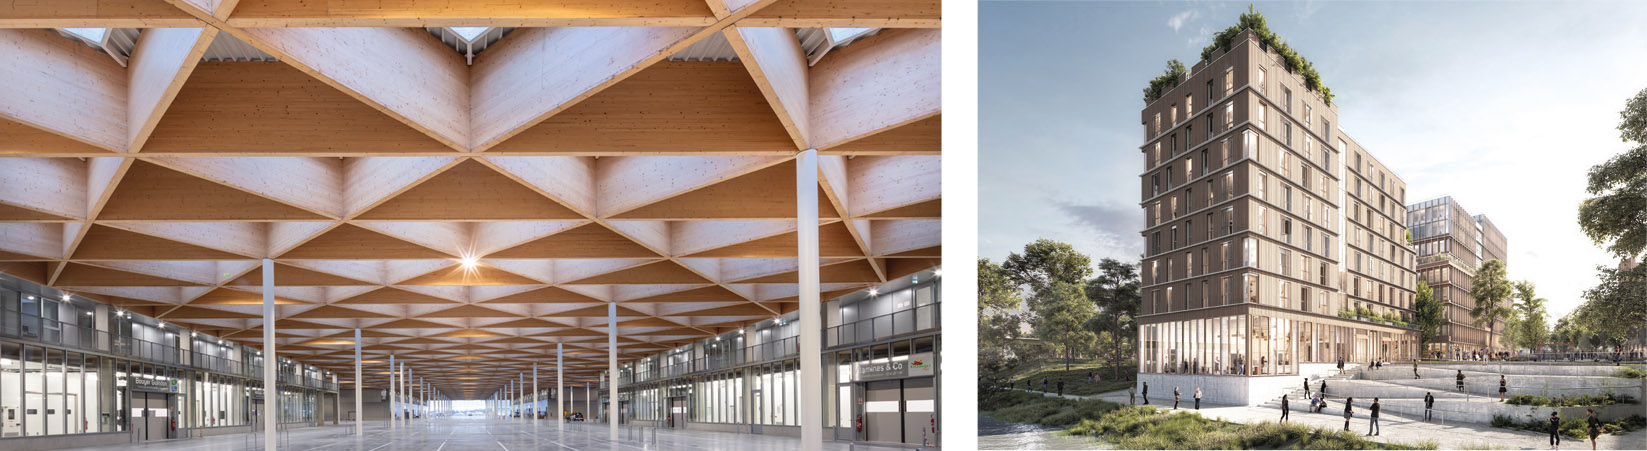 Erik Giudice Architects: Sustainability the Scandinavian way